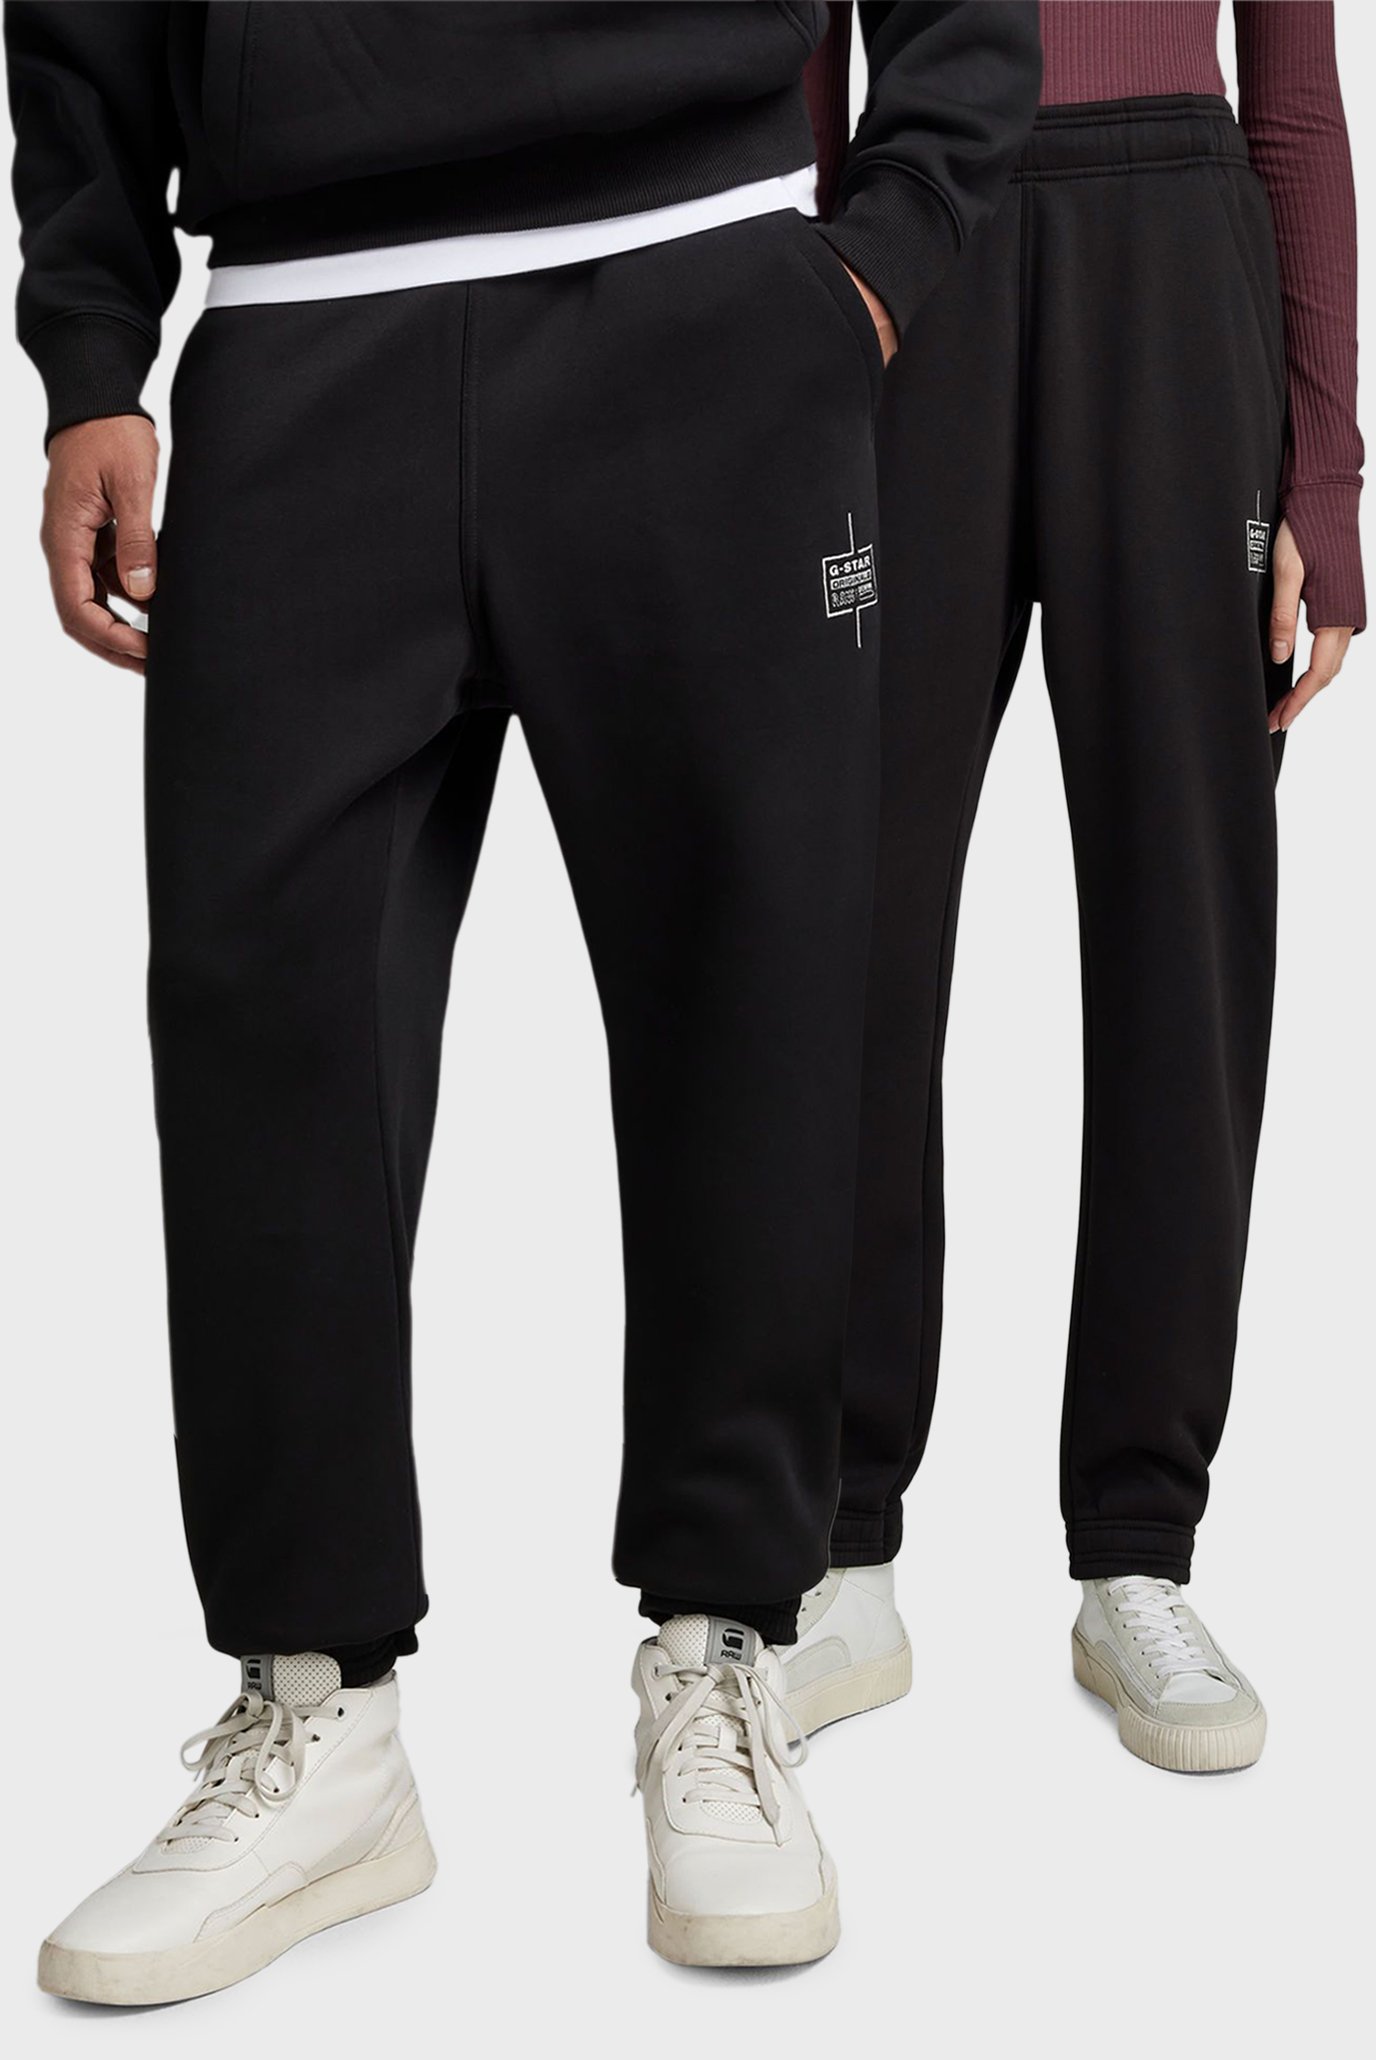 Черные спортивные брюки Unisex core tapered (унисекс) 1